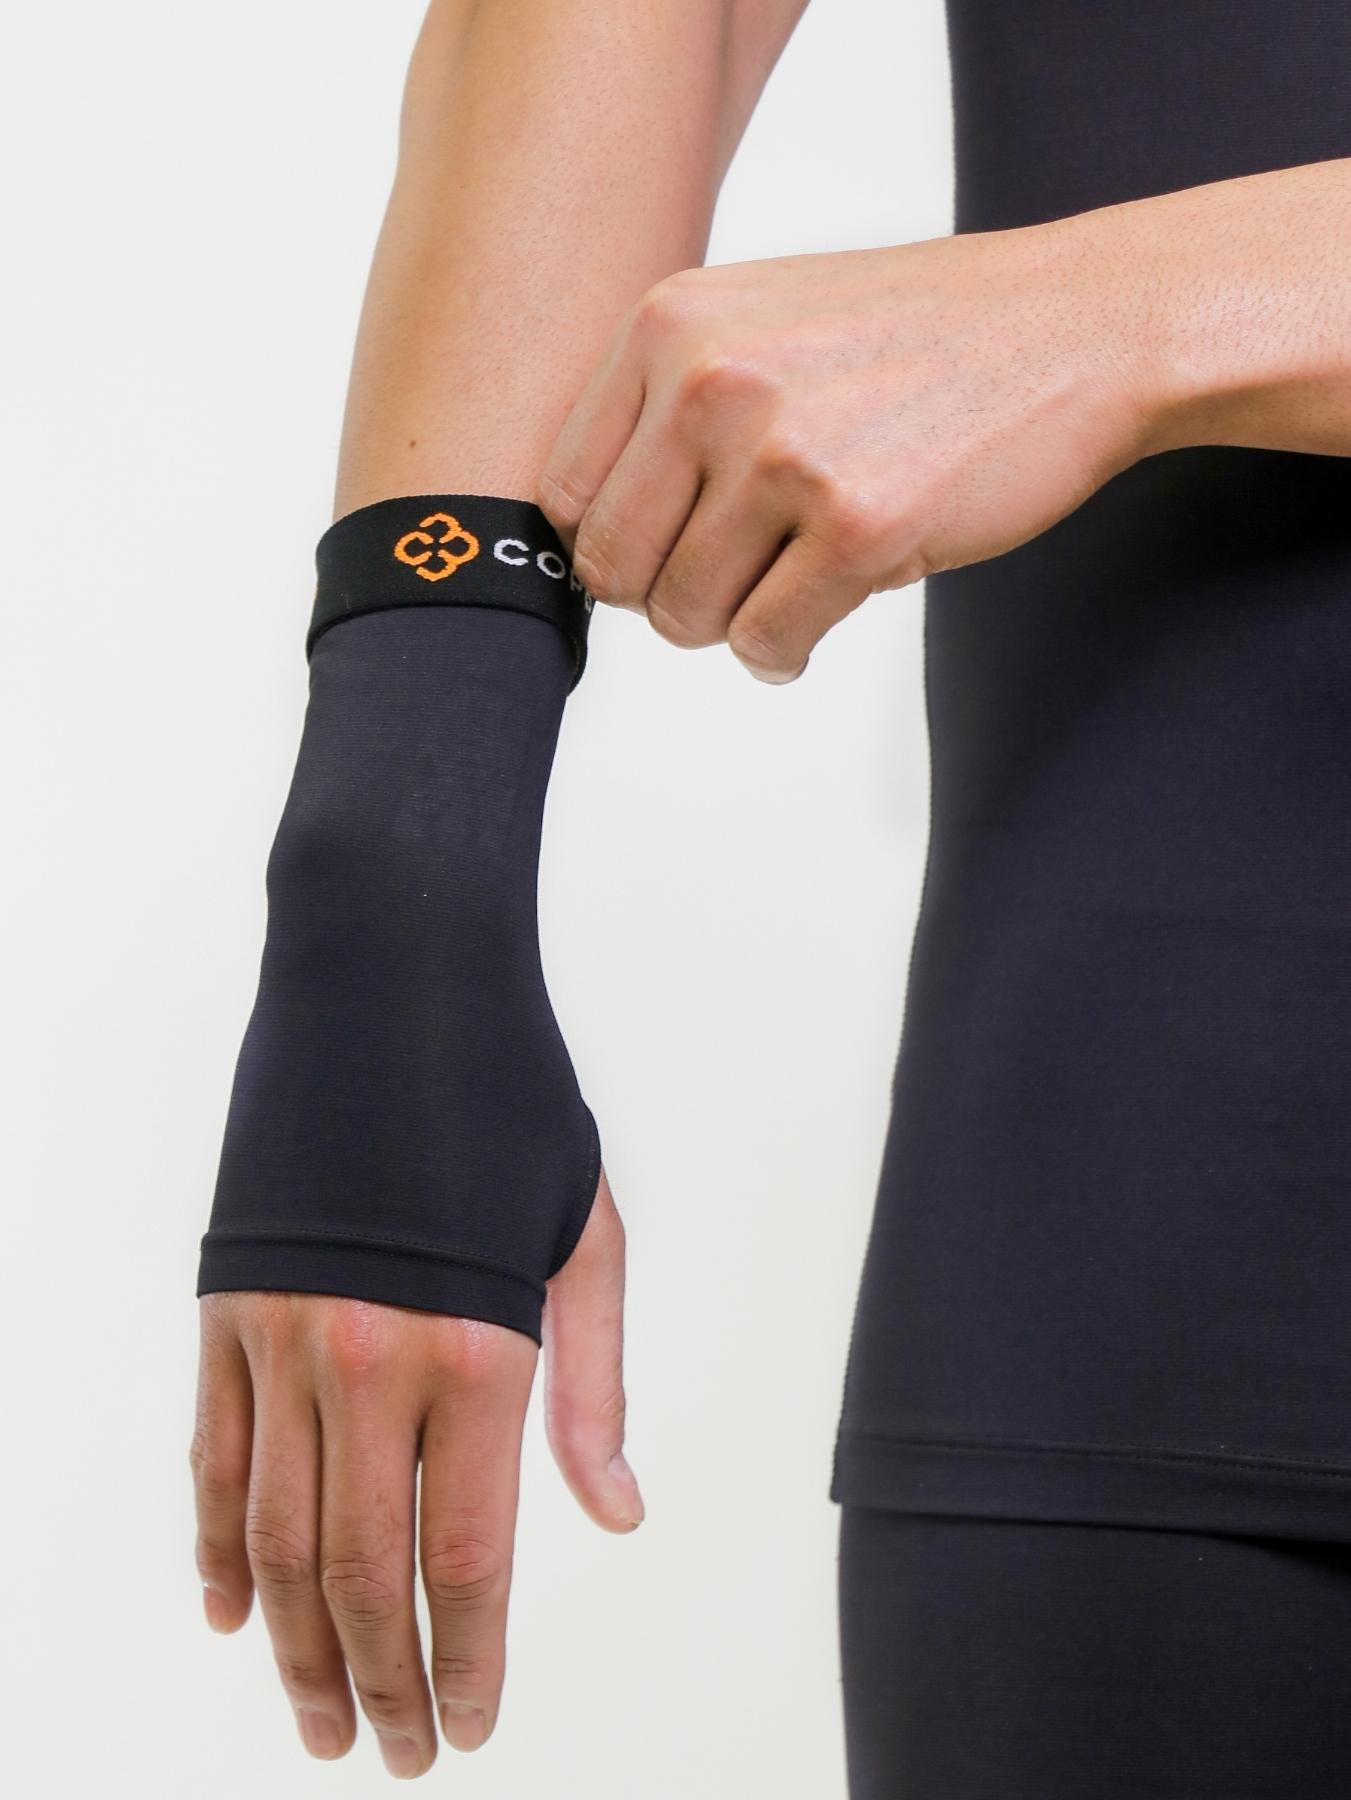 Tommie Copper Compression Wrist Sleeve Joint Pain Relief L/XL Black